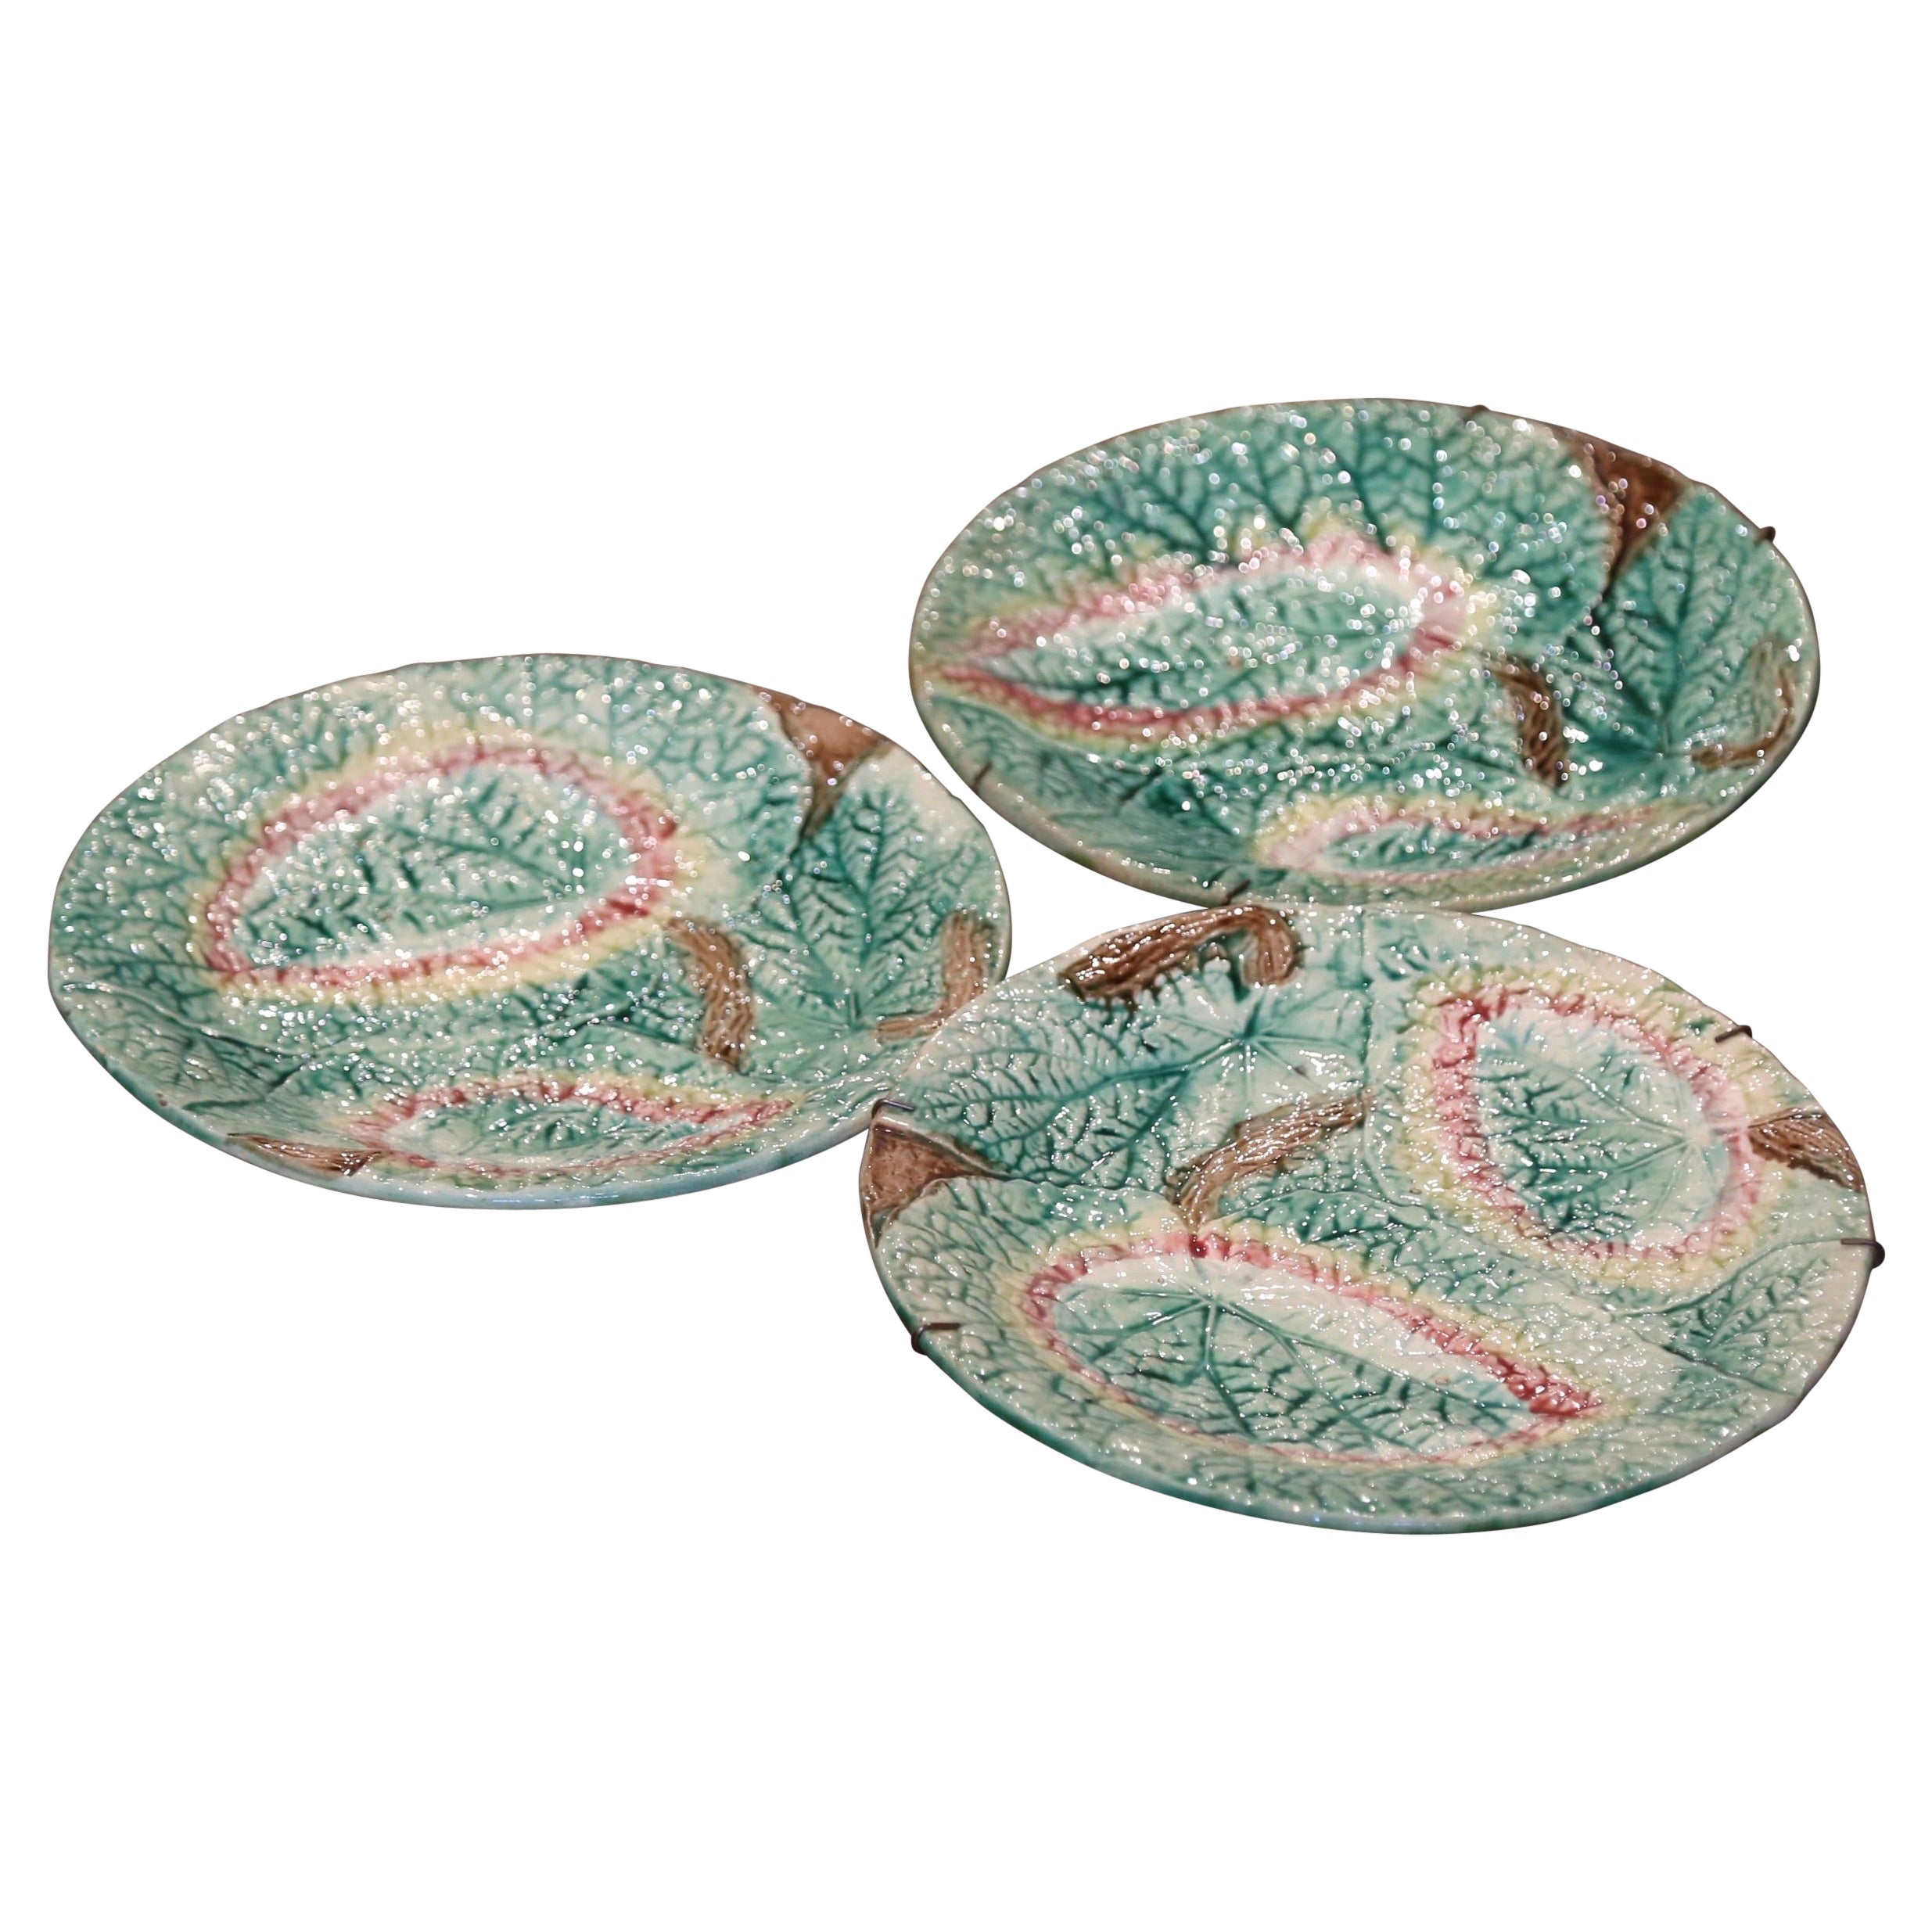 19th Century English Majolica Decorative Plates, Set of 3